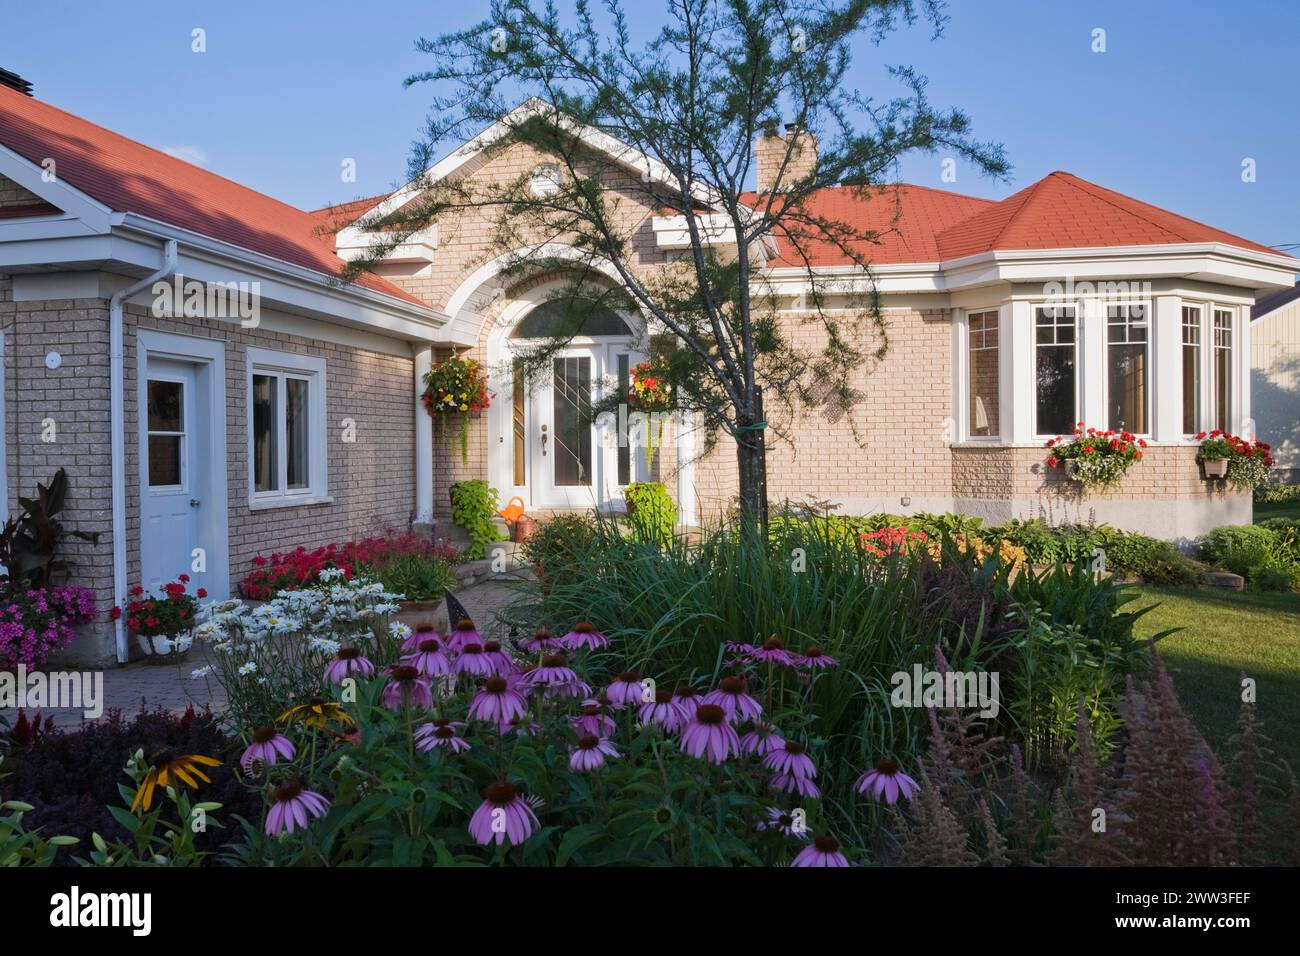 Tan brick with white trim home and landscaped front yard with raised border with red Pelargonium, Geranium flowers, Echinacea purpurea, Coneflowers Stock Photo